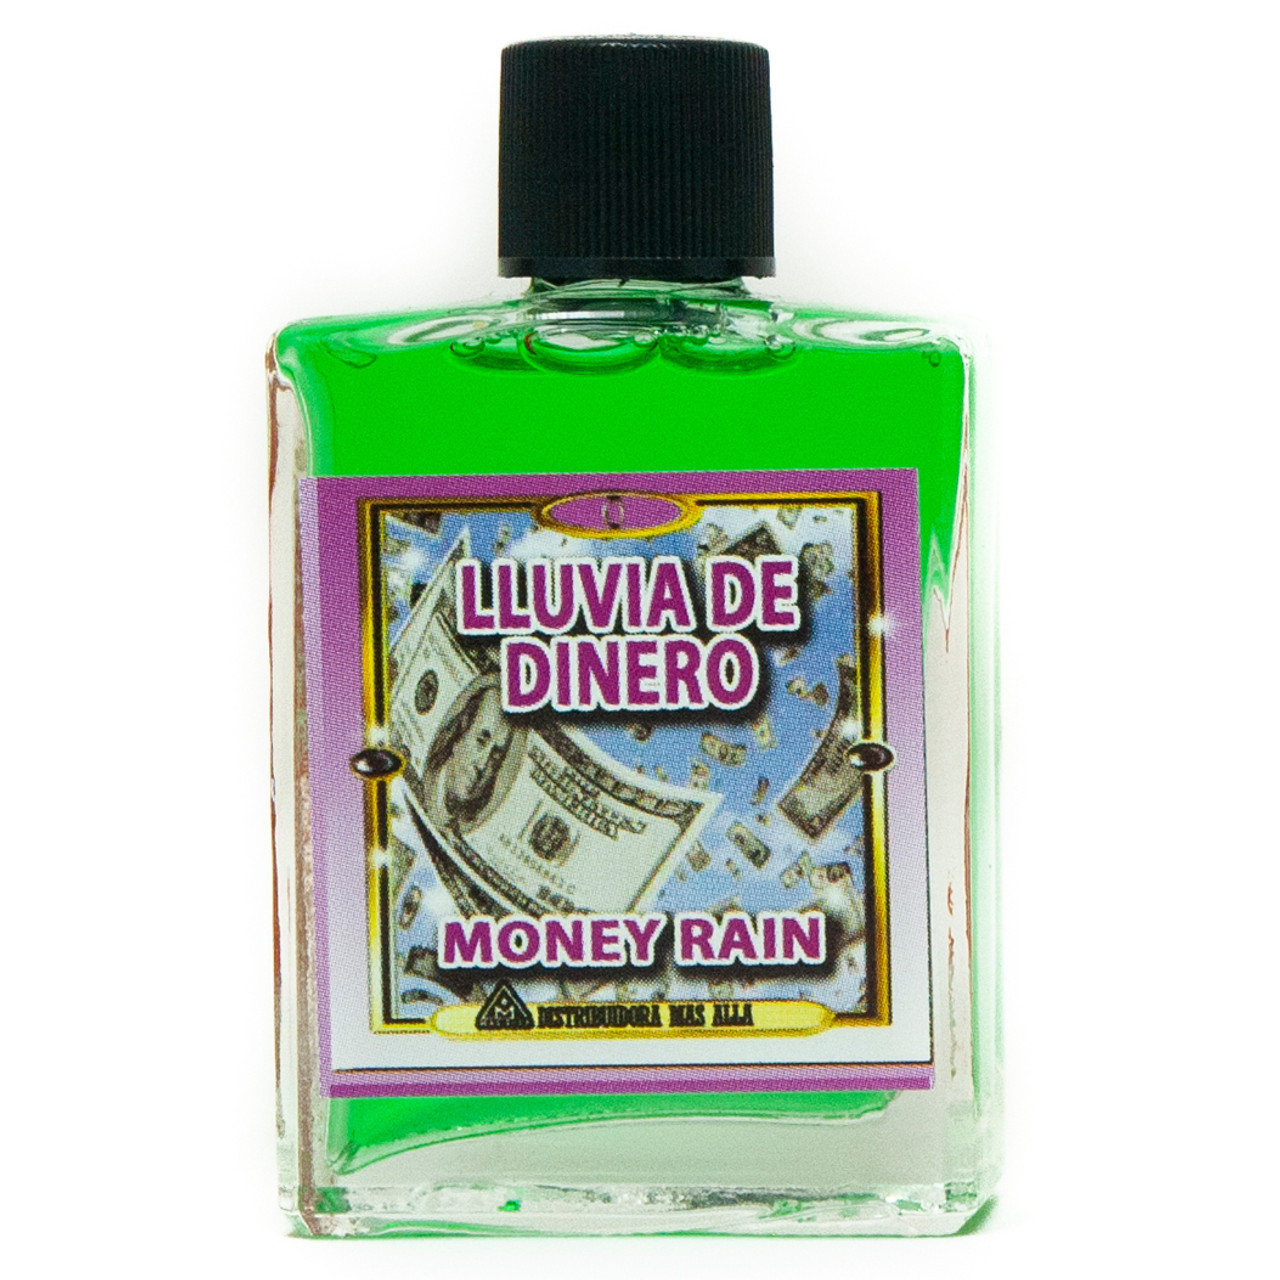 Perfume Lluvia De Dinero - Eseoteric Perfume Money Rain